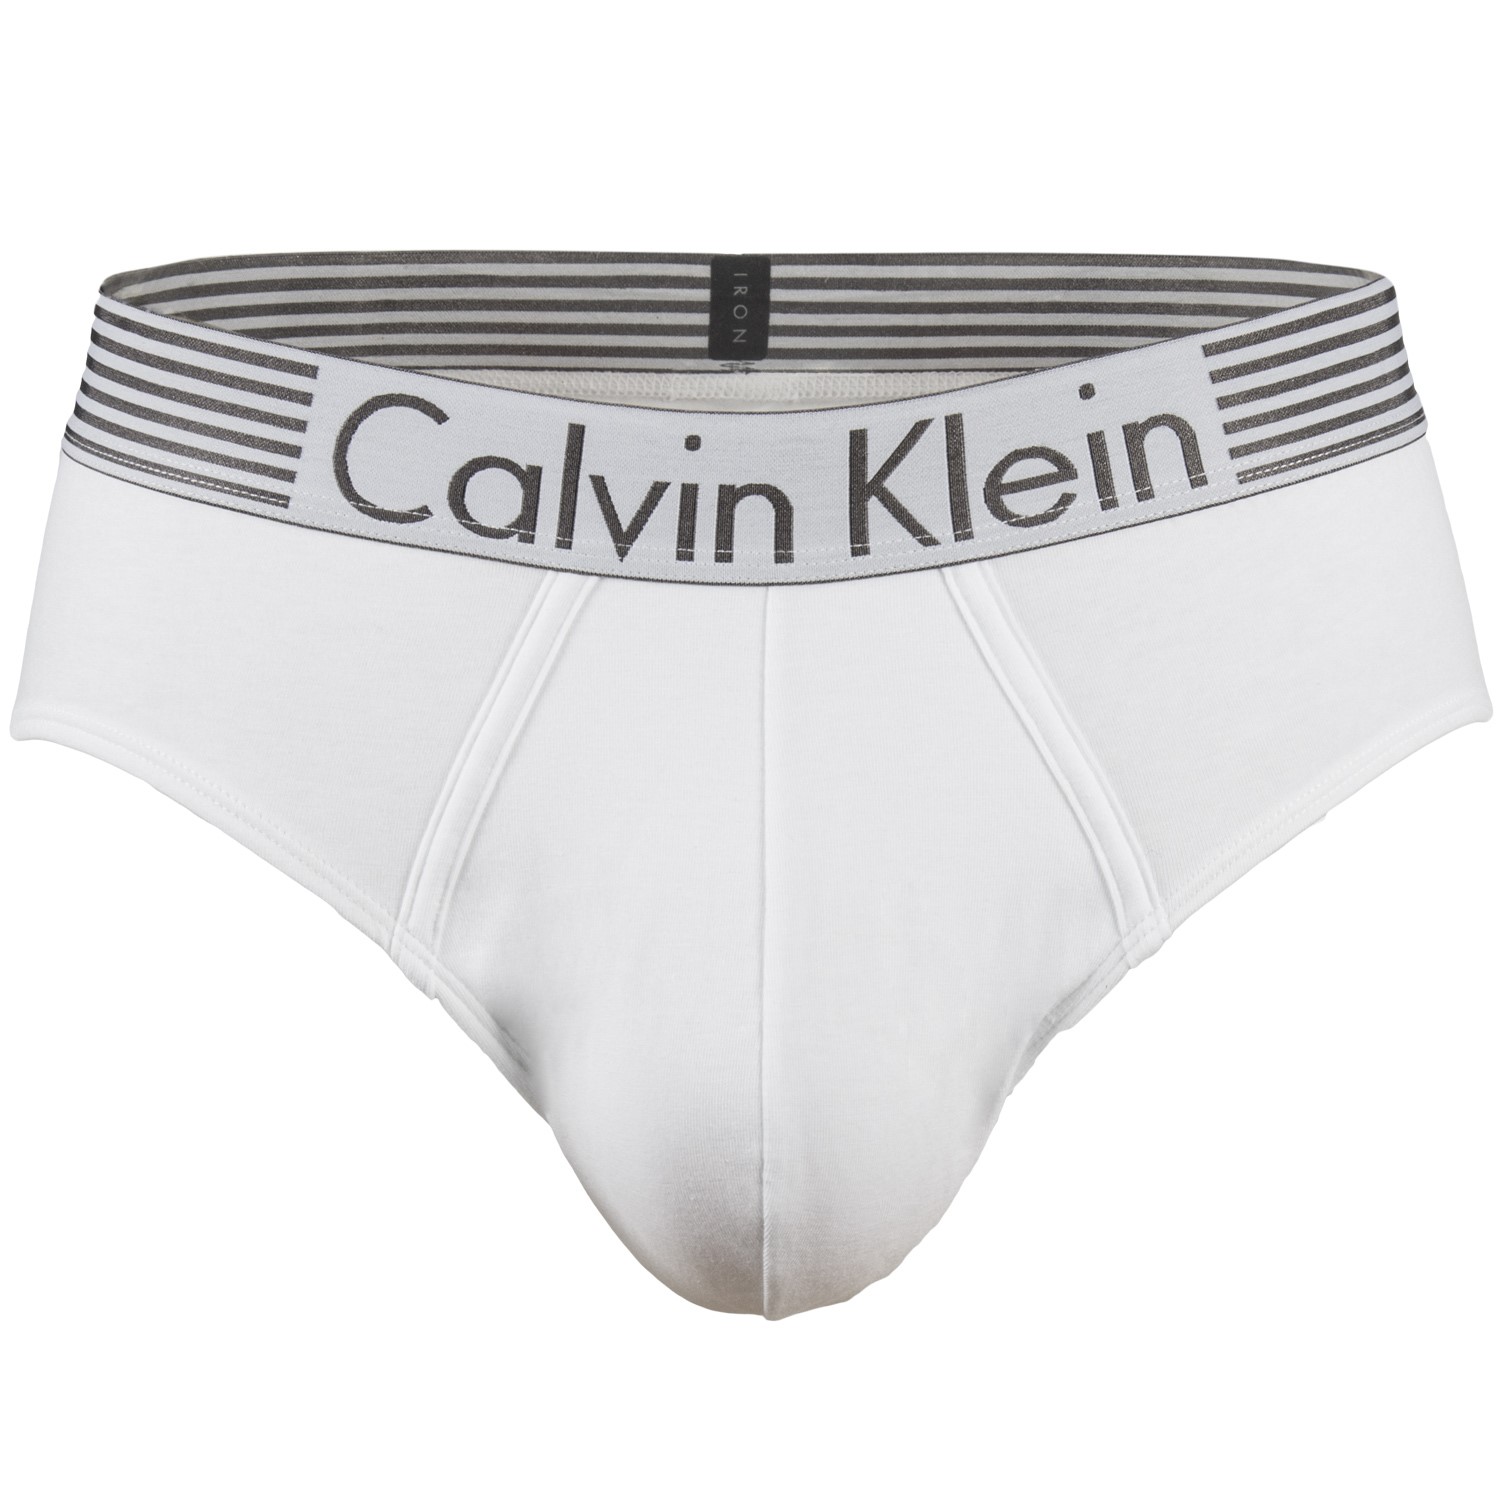 Calvin Klein Iron Strength Cotton Hip Brief